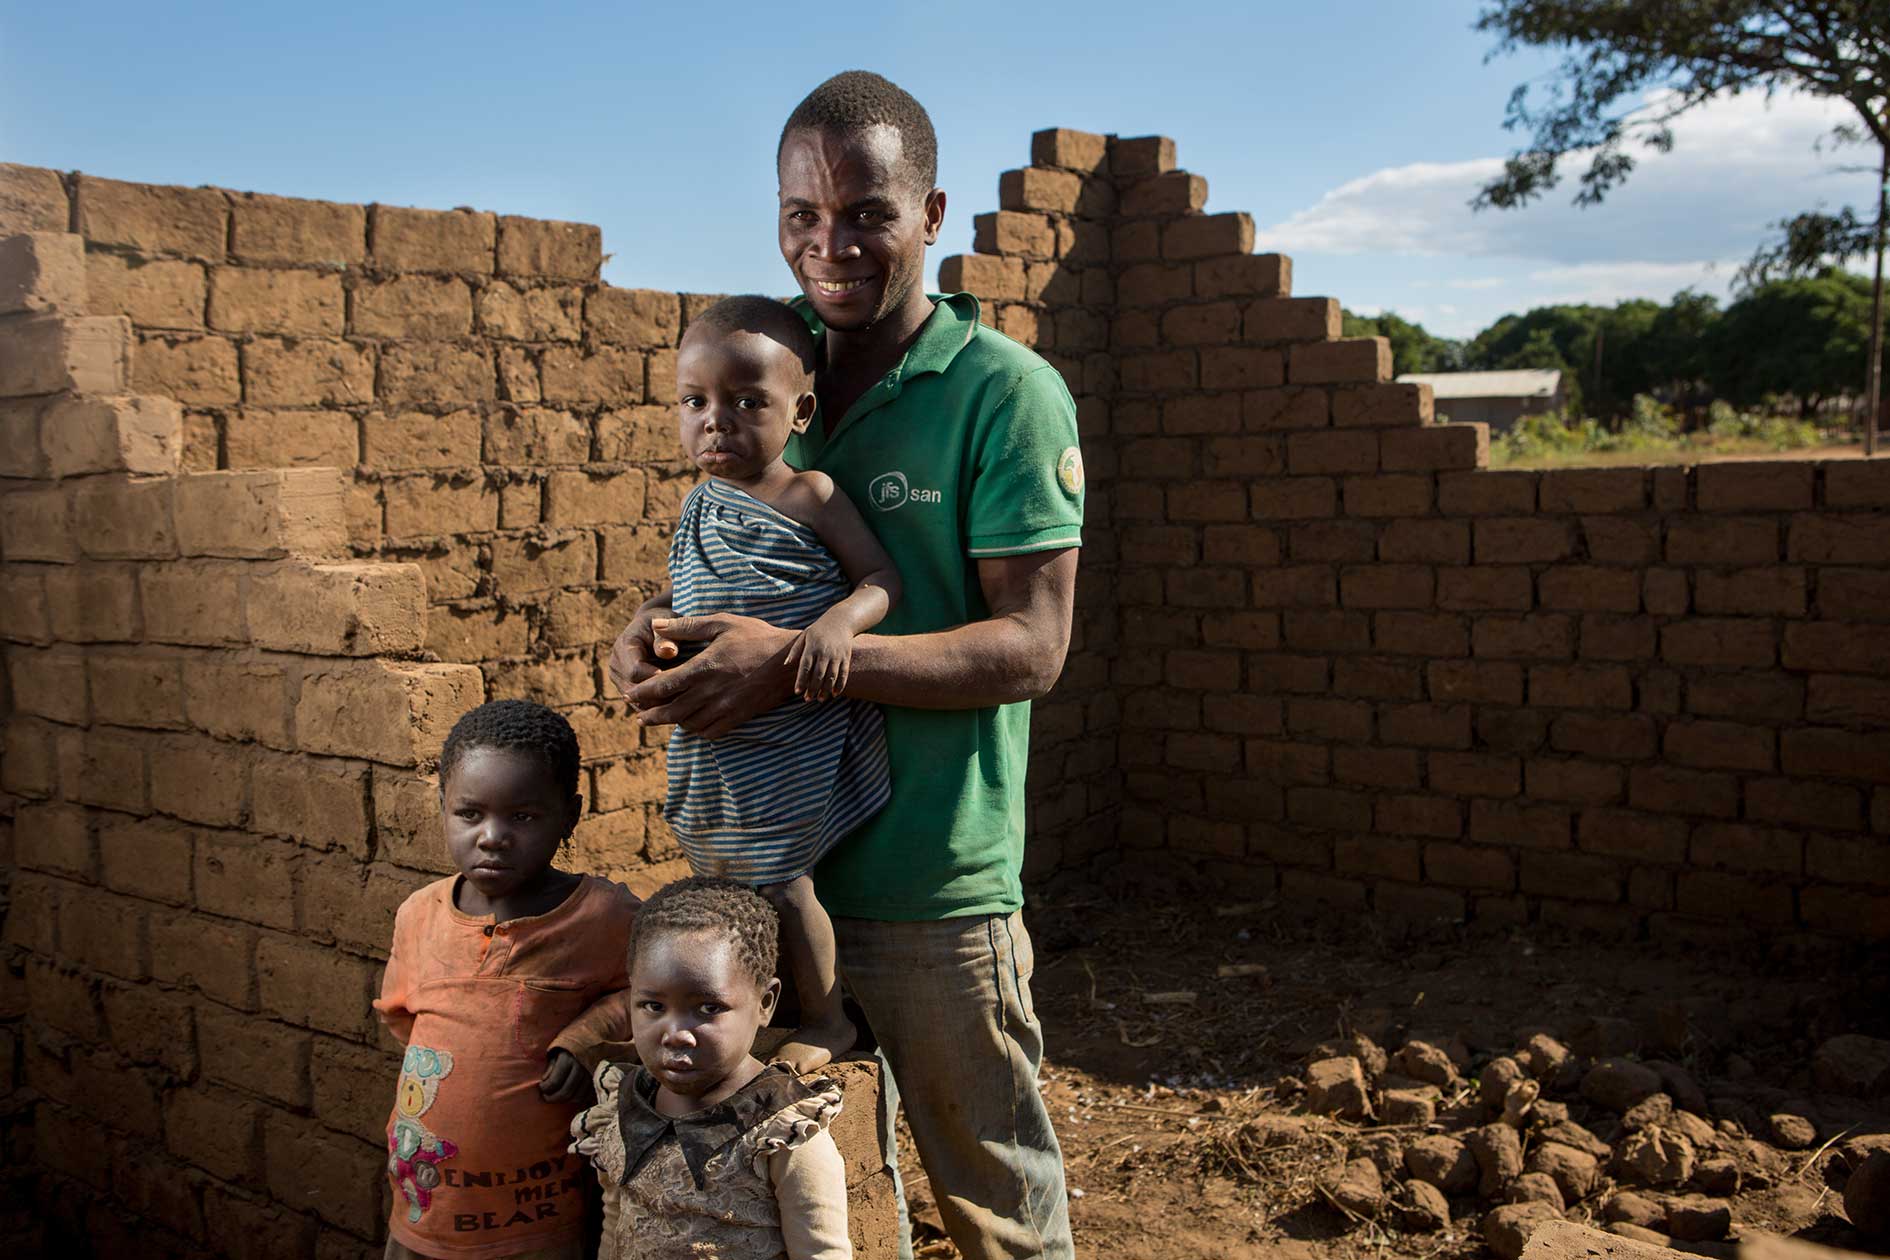 A smallholder family in Mozambique. Photo: Allison Shelley